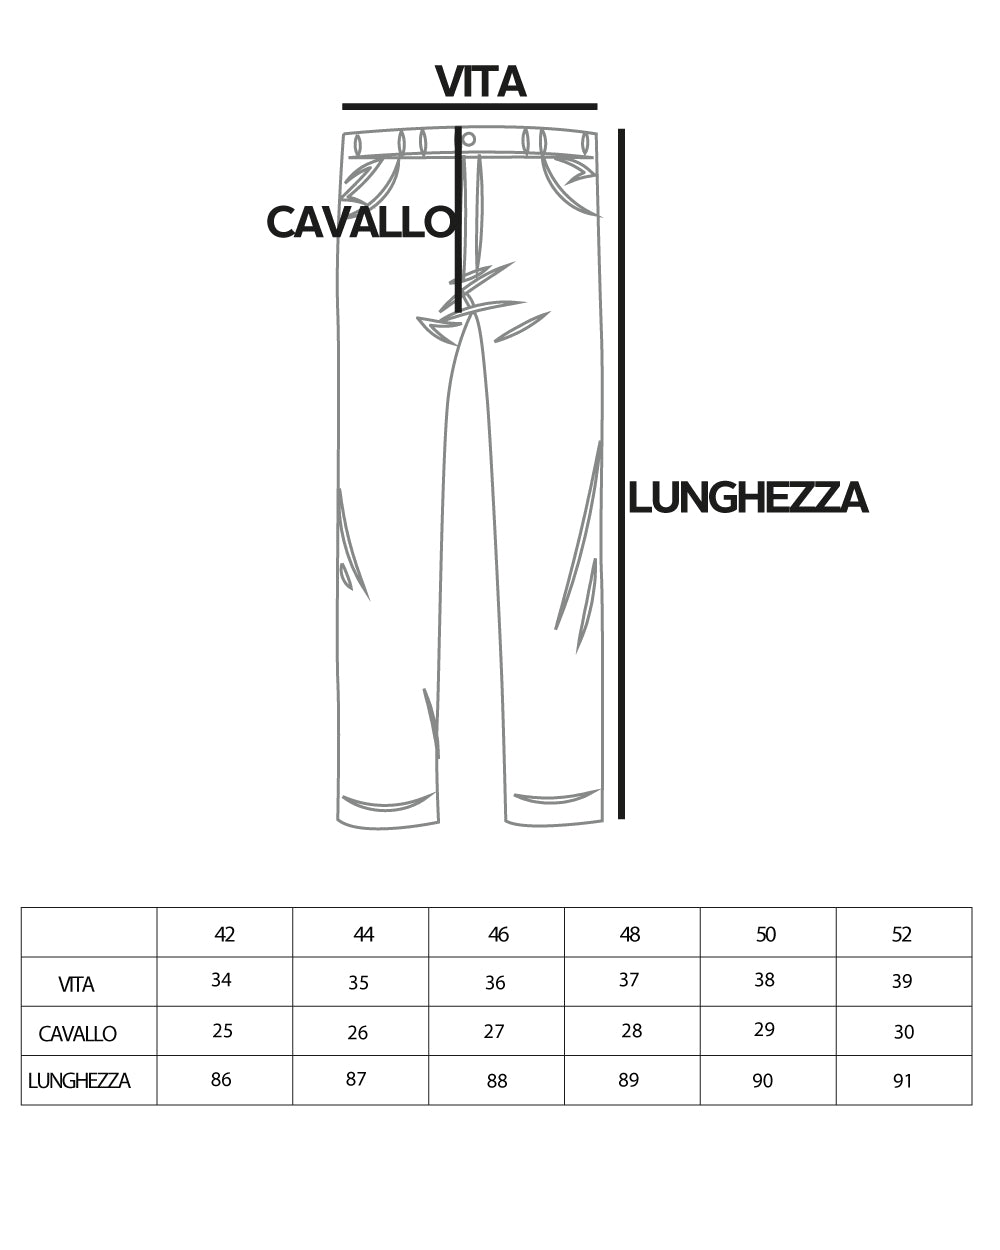 Pantaloni Uomo Tasca America Basic Cotone Elastico Blu Royal Slim Classico GIOSAL-P5007A